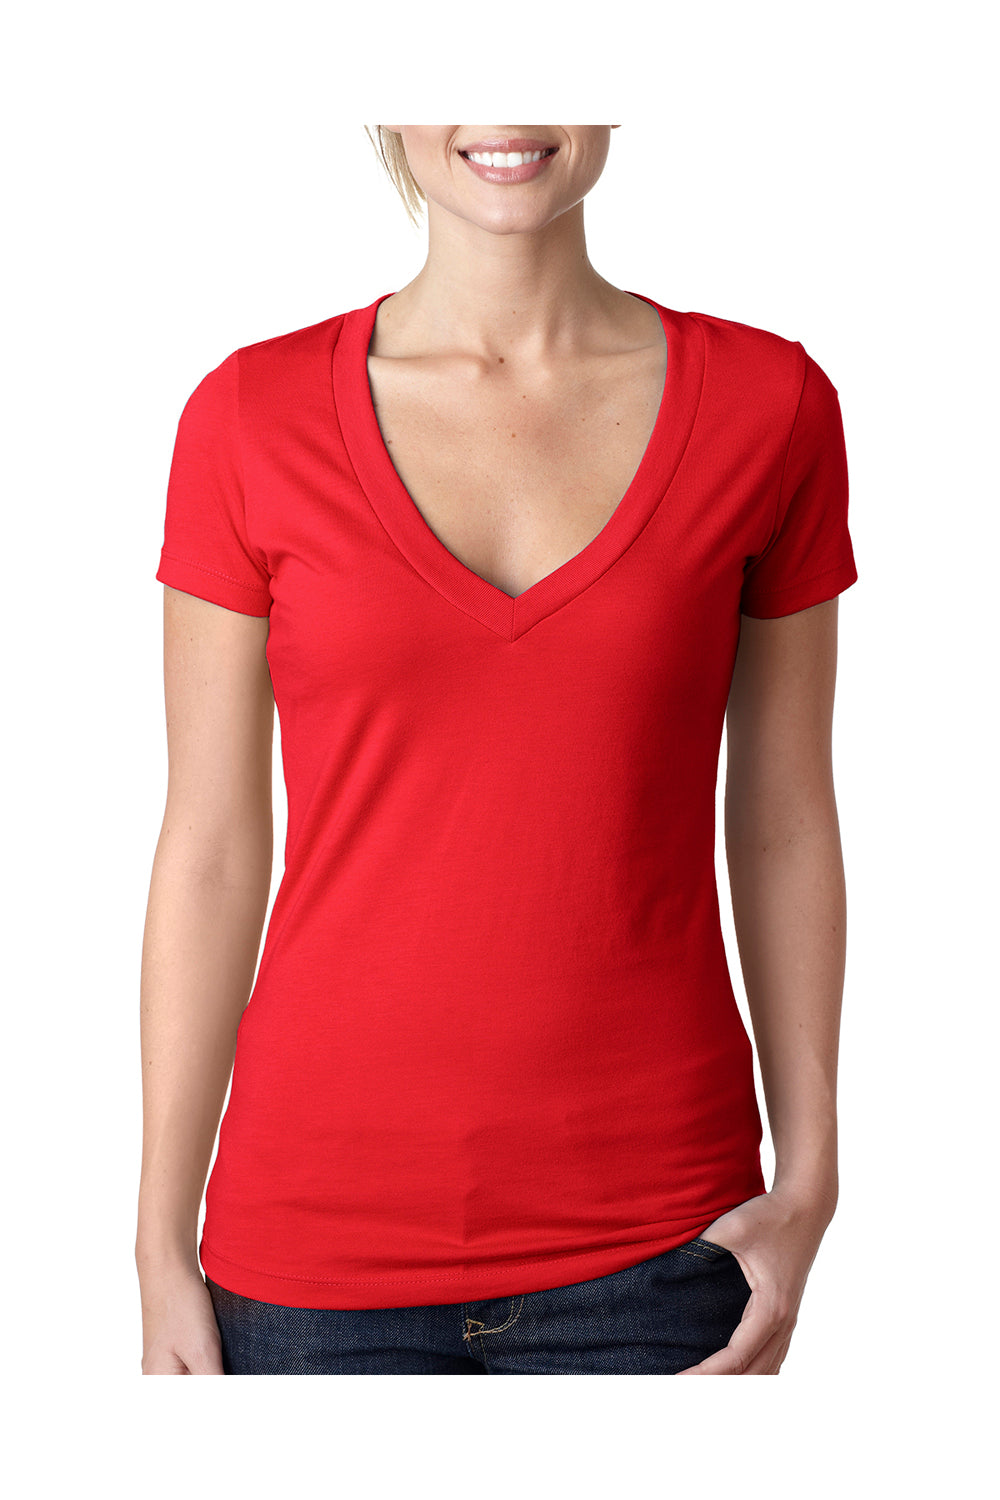 Next Level 6640 Womens CVC Jersey Short Sleeve V-Neck T-Shirt Red Front